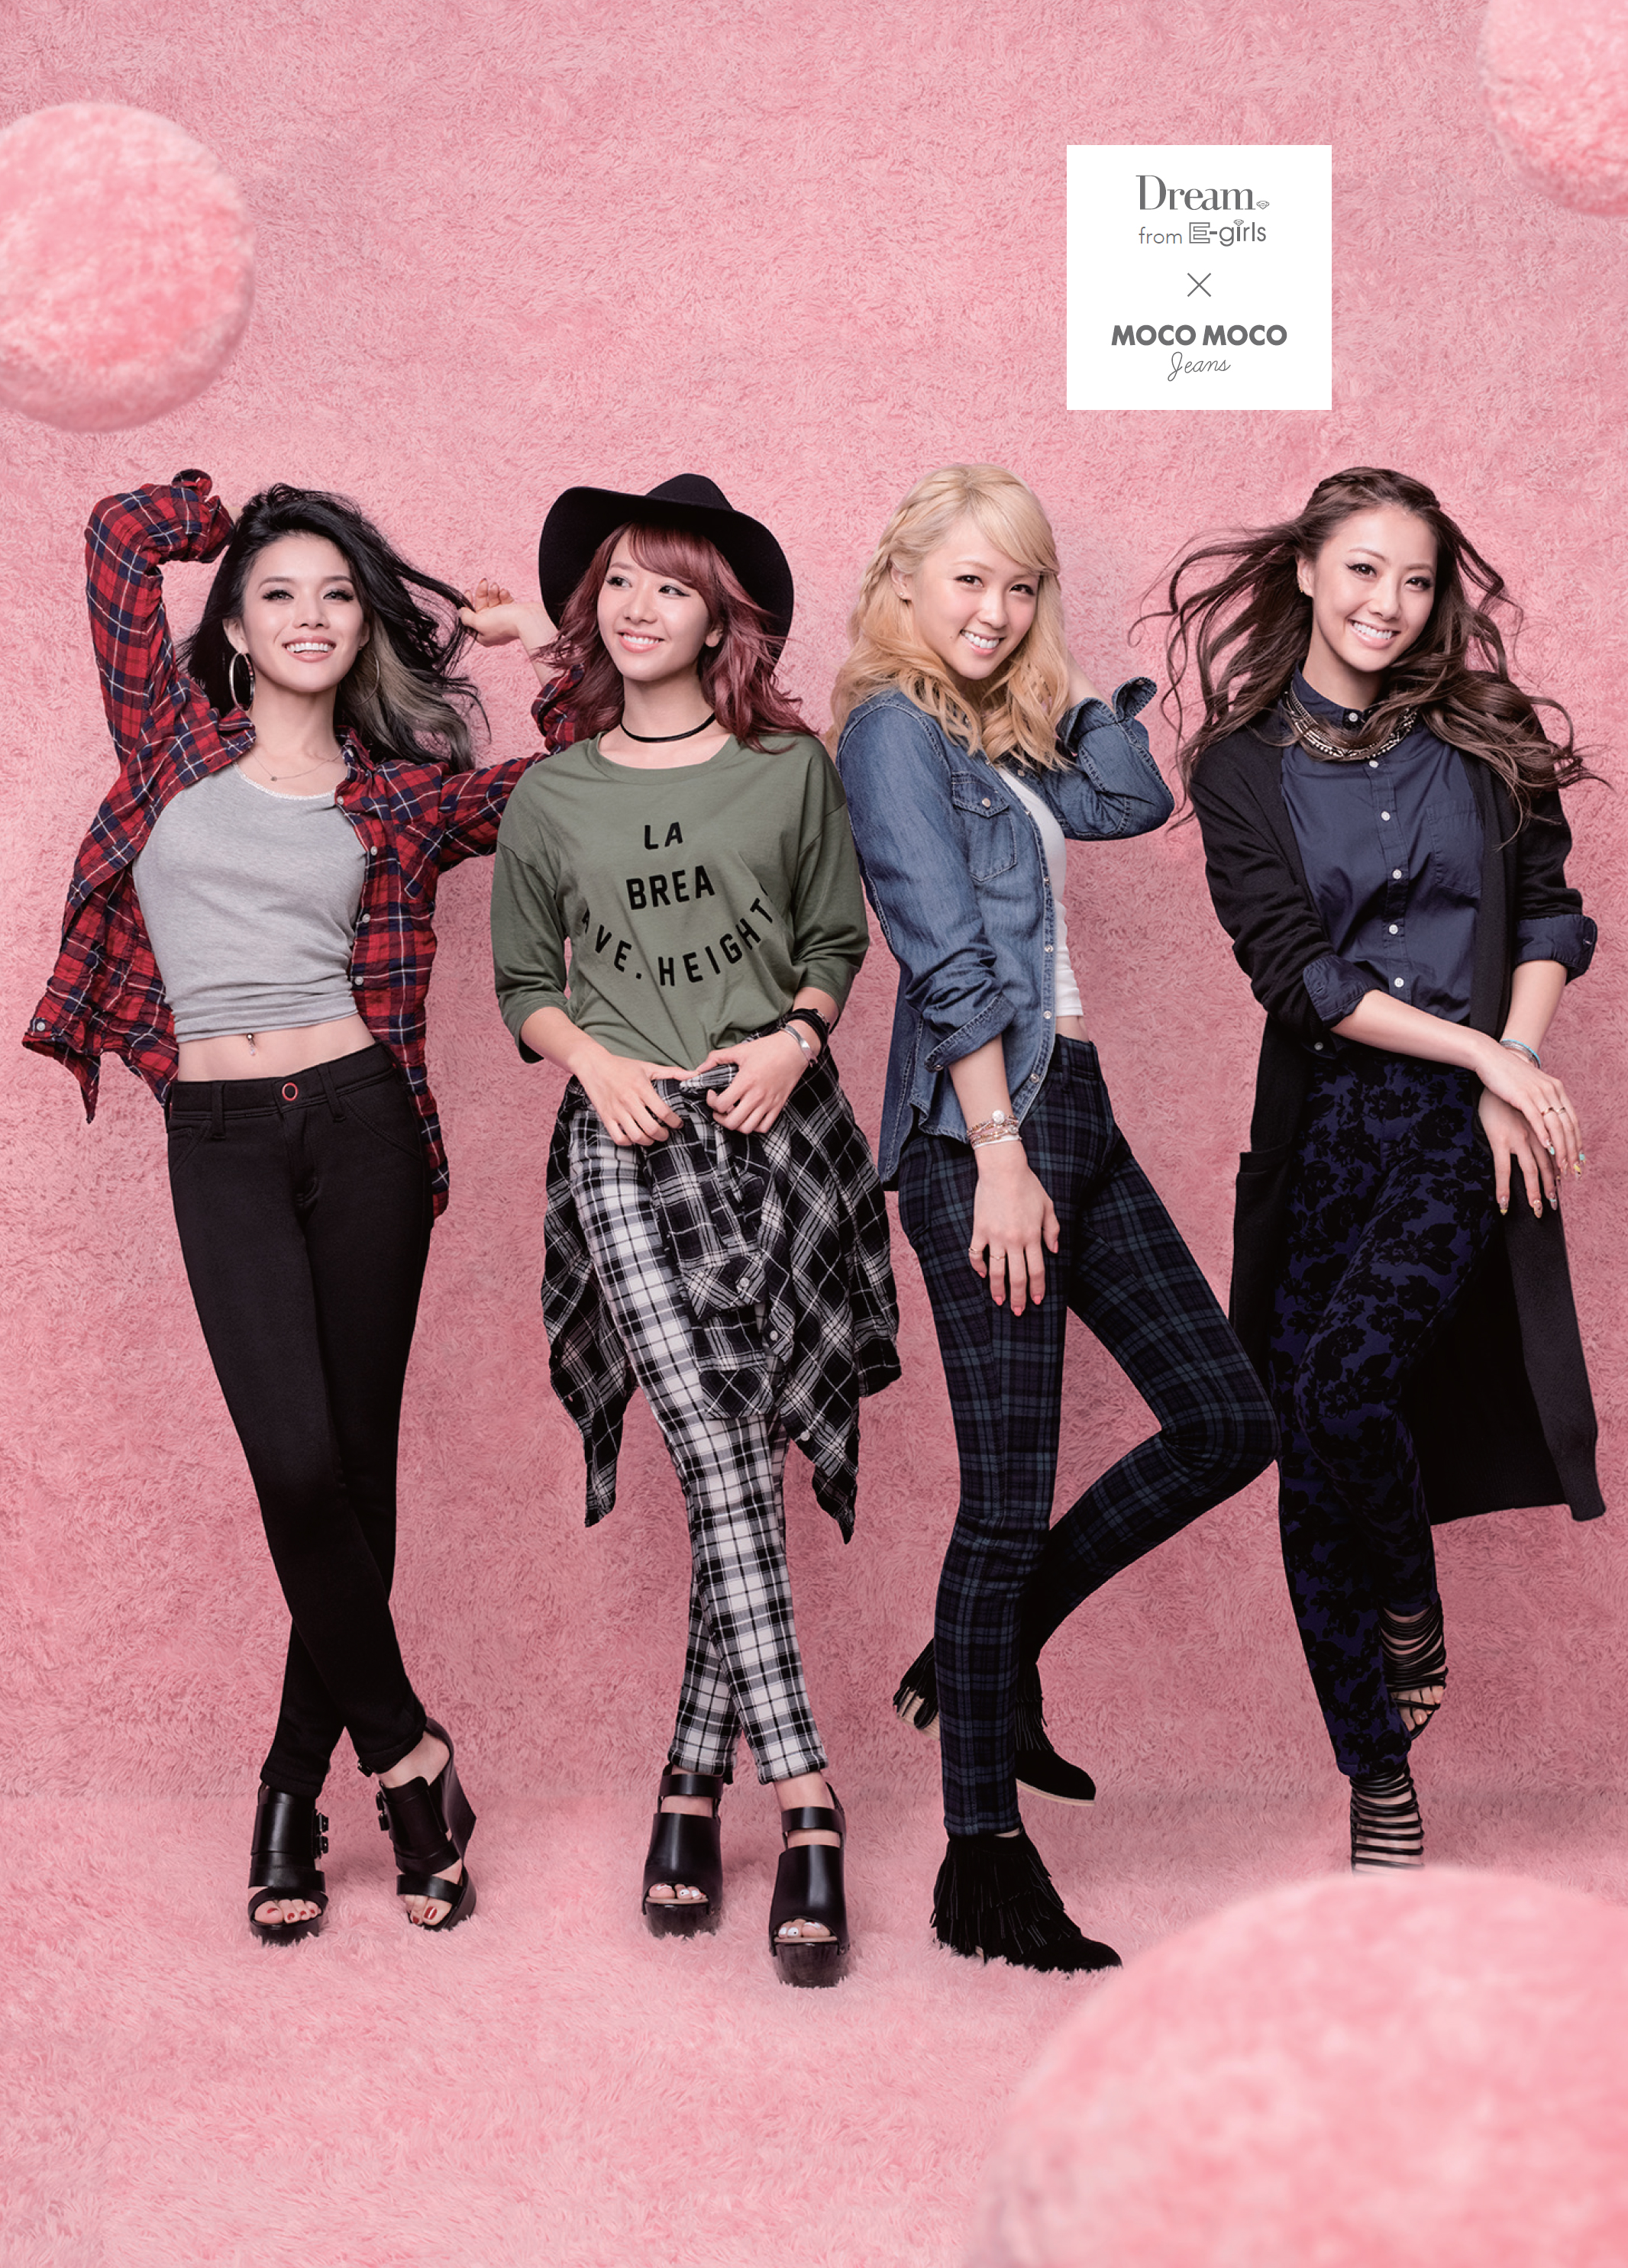 Right On ｍｏｃｏｍｏｃｏ Jeans キャンペーンcm イメージキャラクターとしてe Girls の中心メンバーとしても活躍中の Dream の4人がcm出演 新cm モコモコイロイロ 篇 株式会社ライトオンのプレスリリース